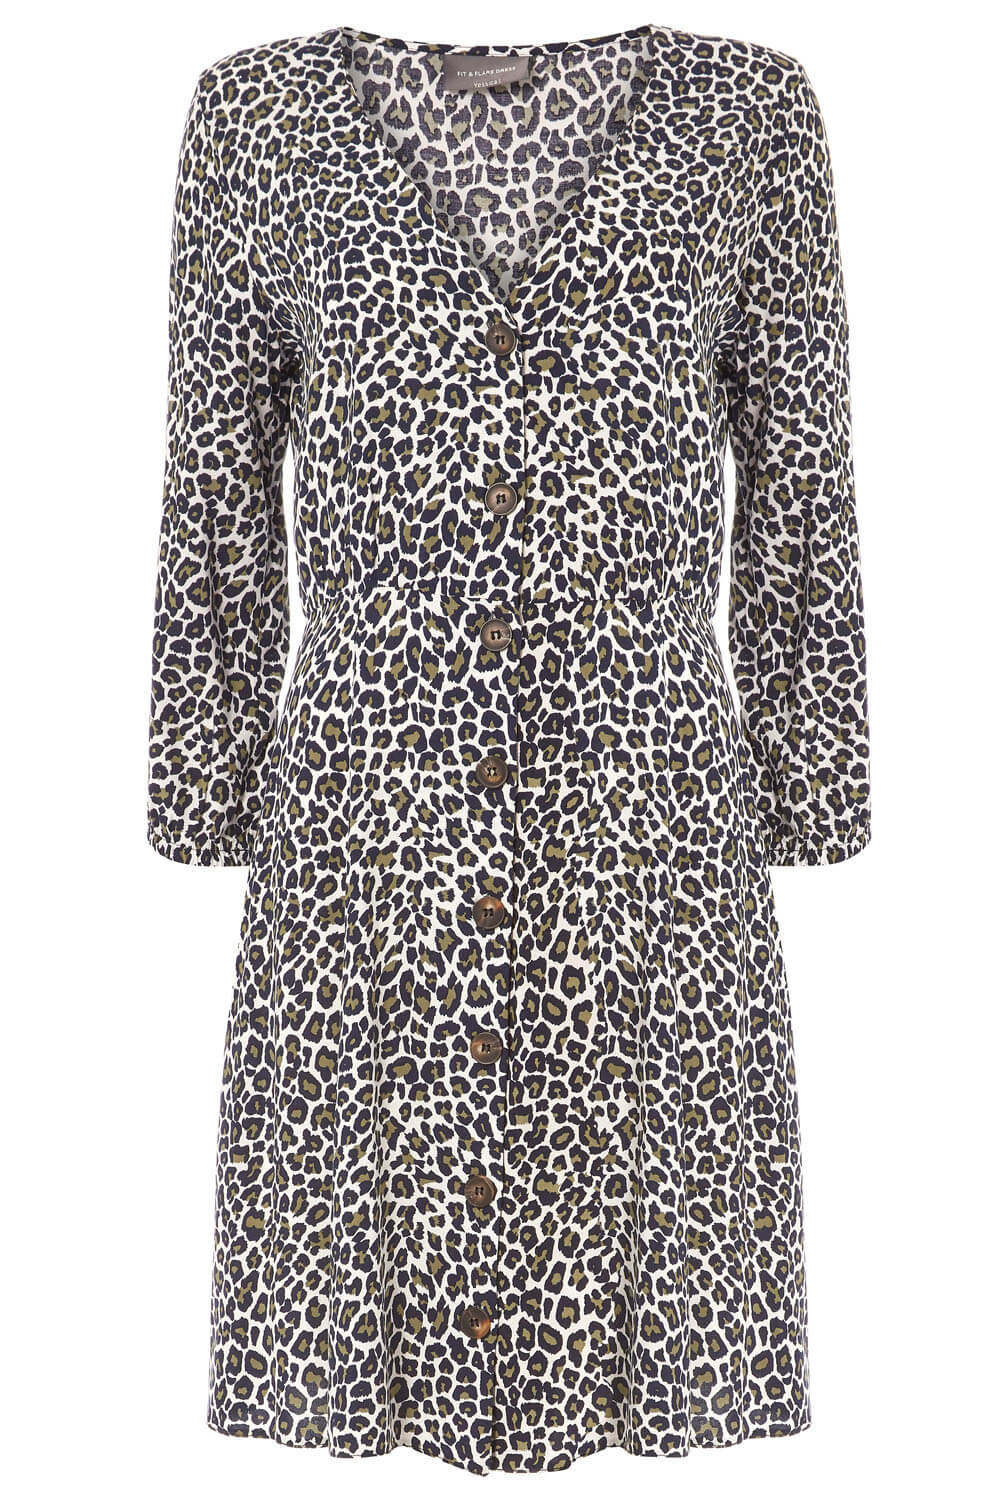 KHAKI Leopard Print Button Through Dress, Image 5 of 5